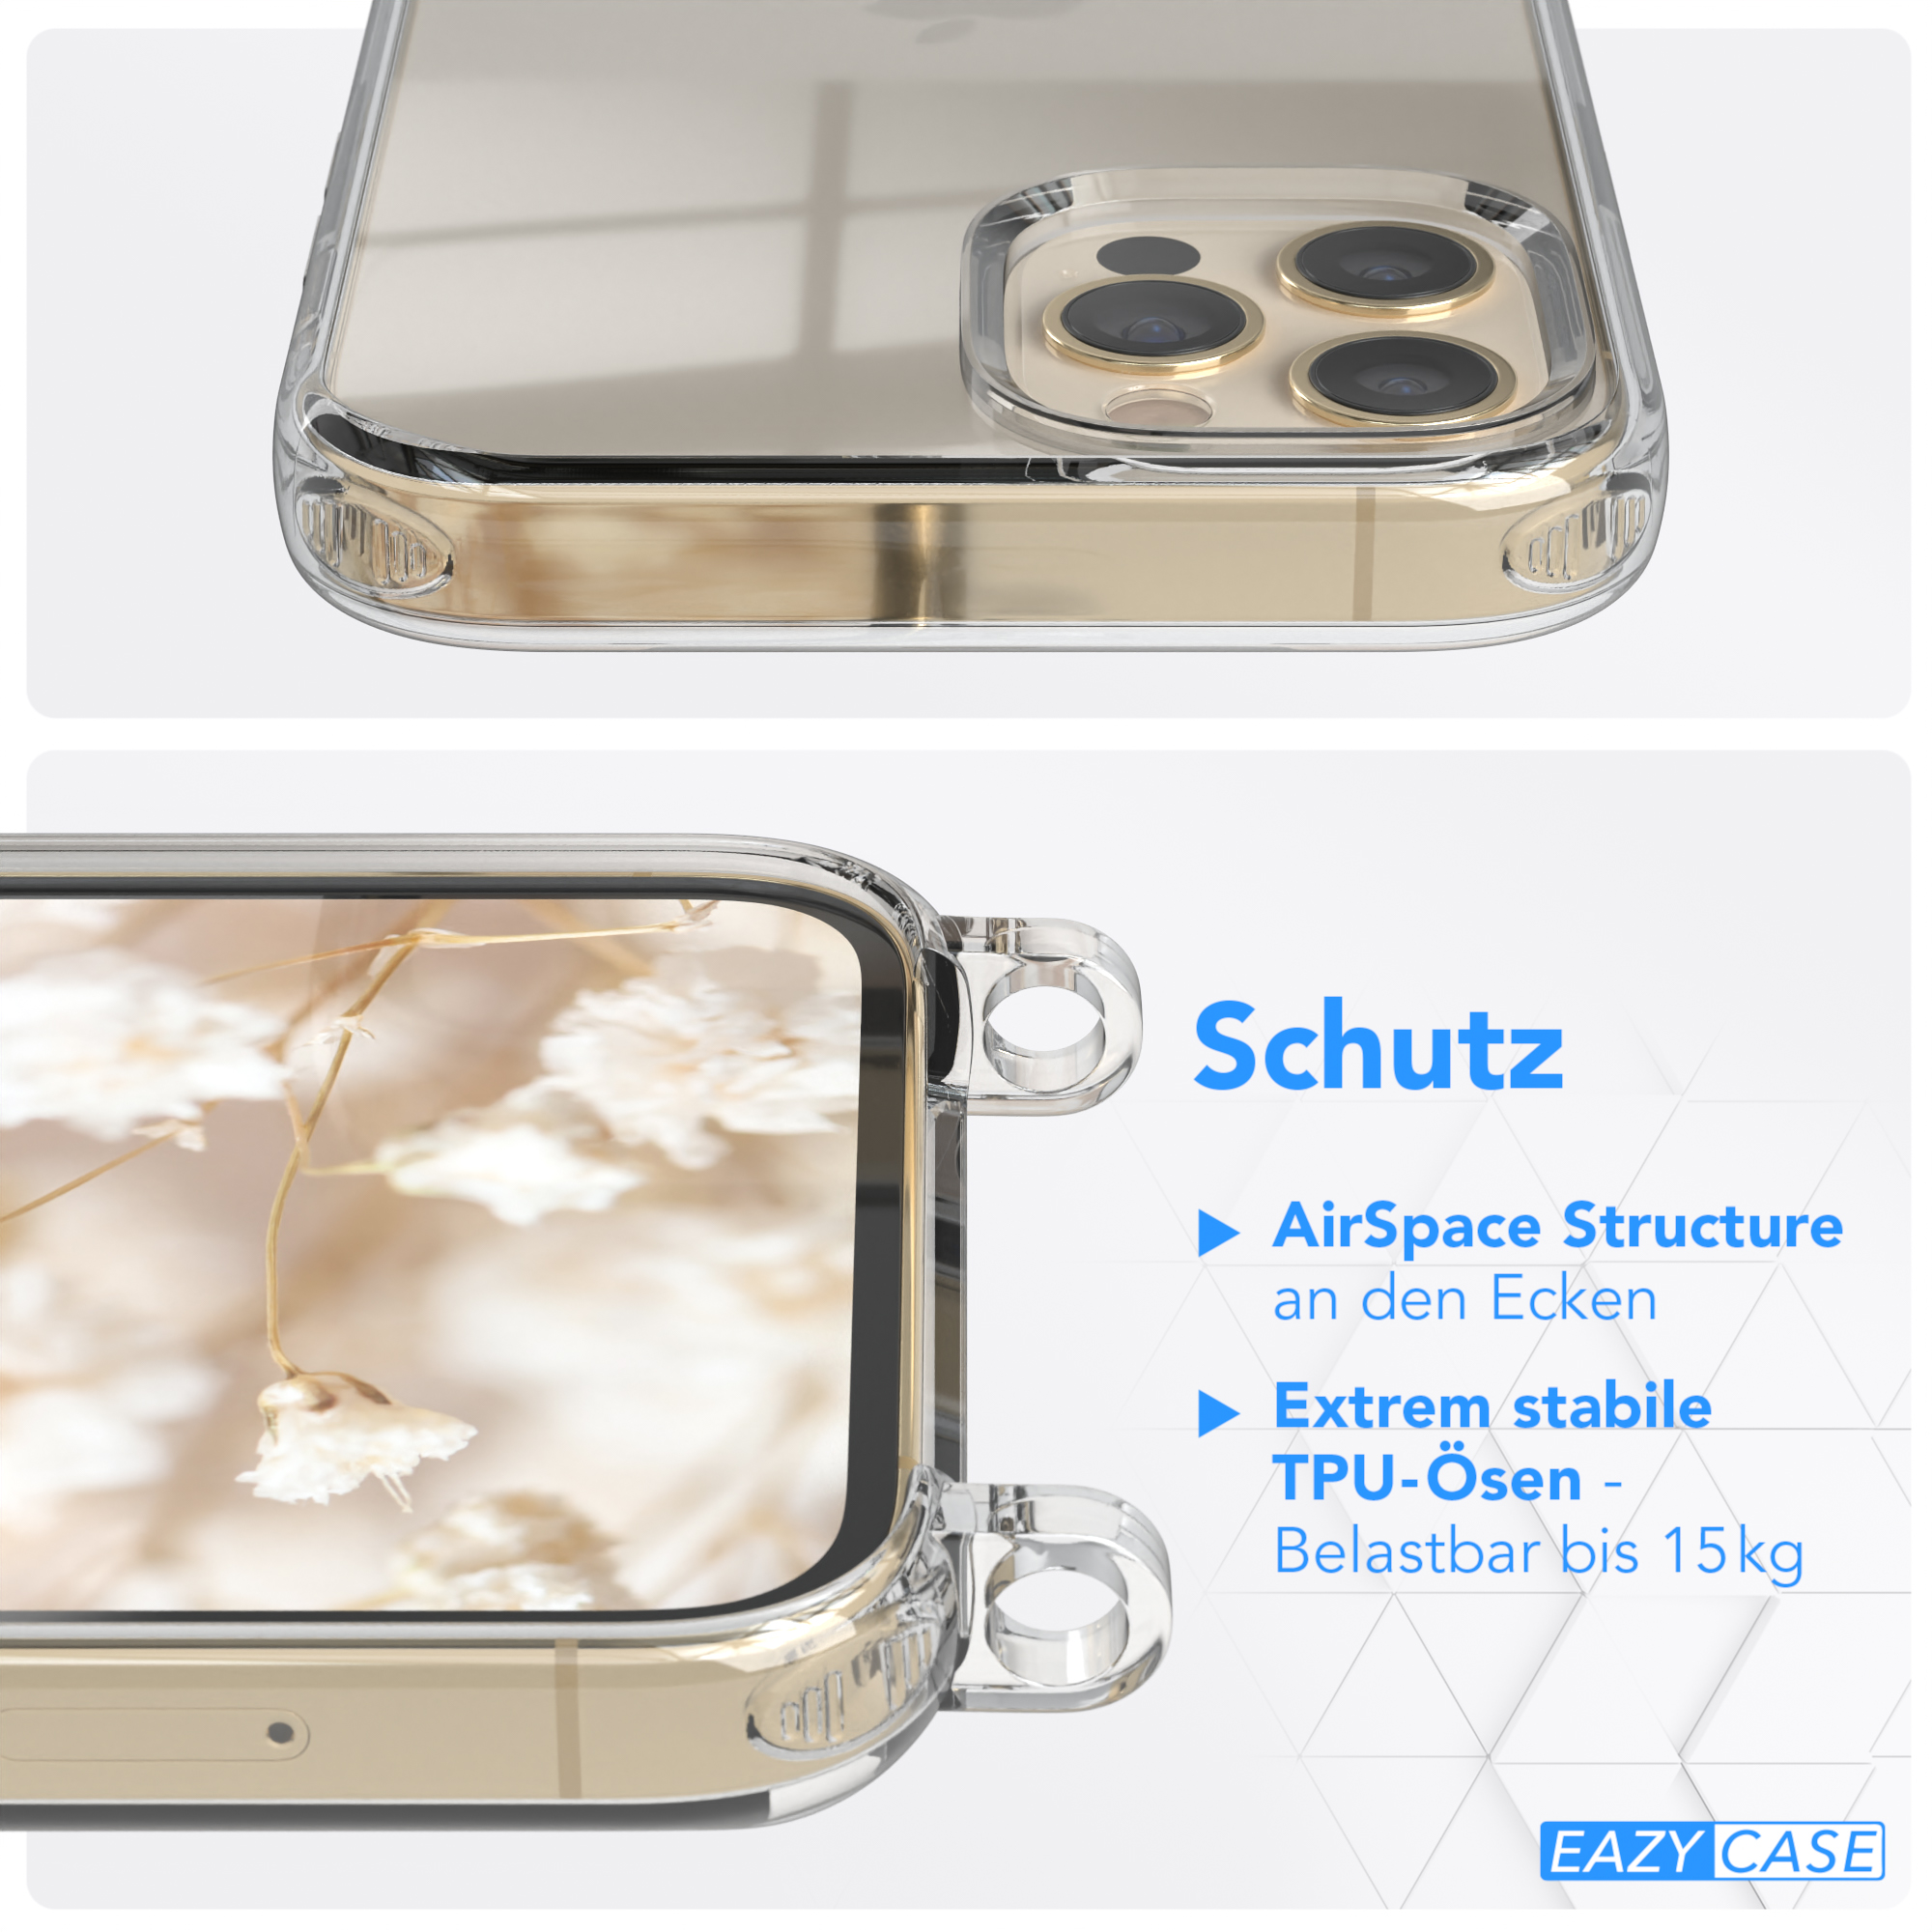 12 Pro, iPhone CASE Orange Umhängetasche, Transparente Boho EAZY Style, 12 Grün mit / Handyhülle Apple, Kordel /